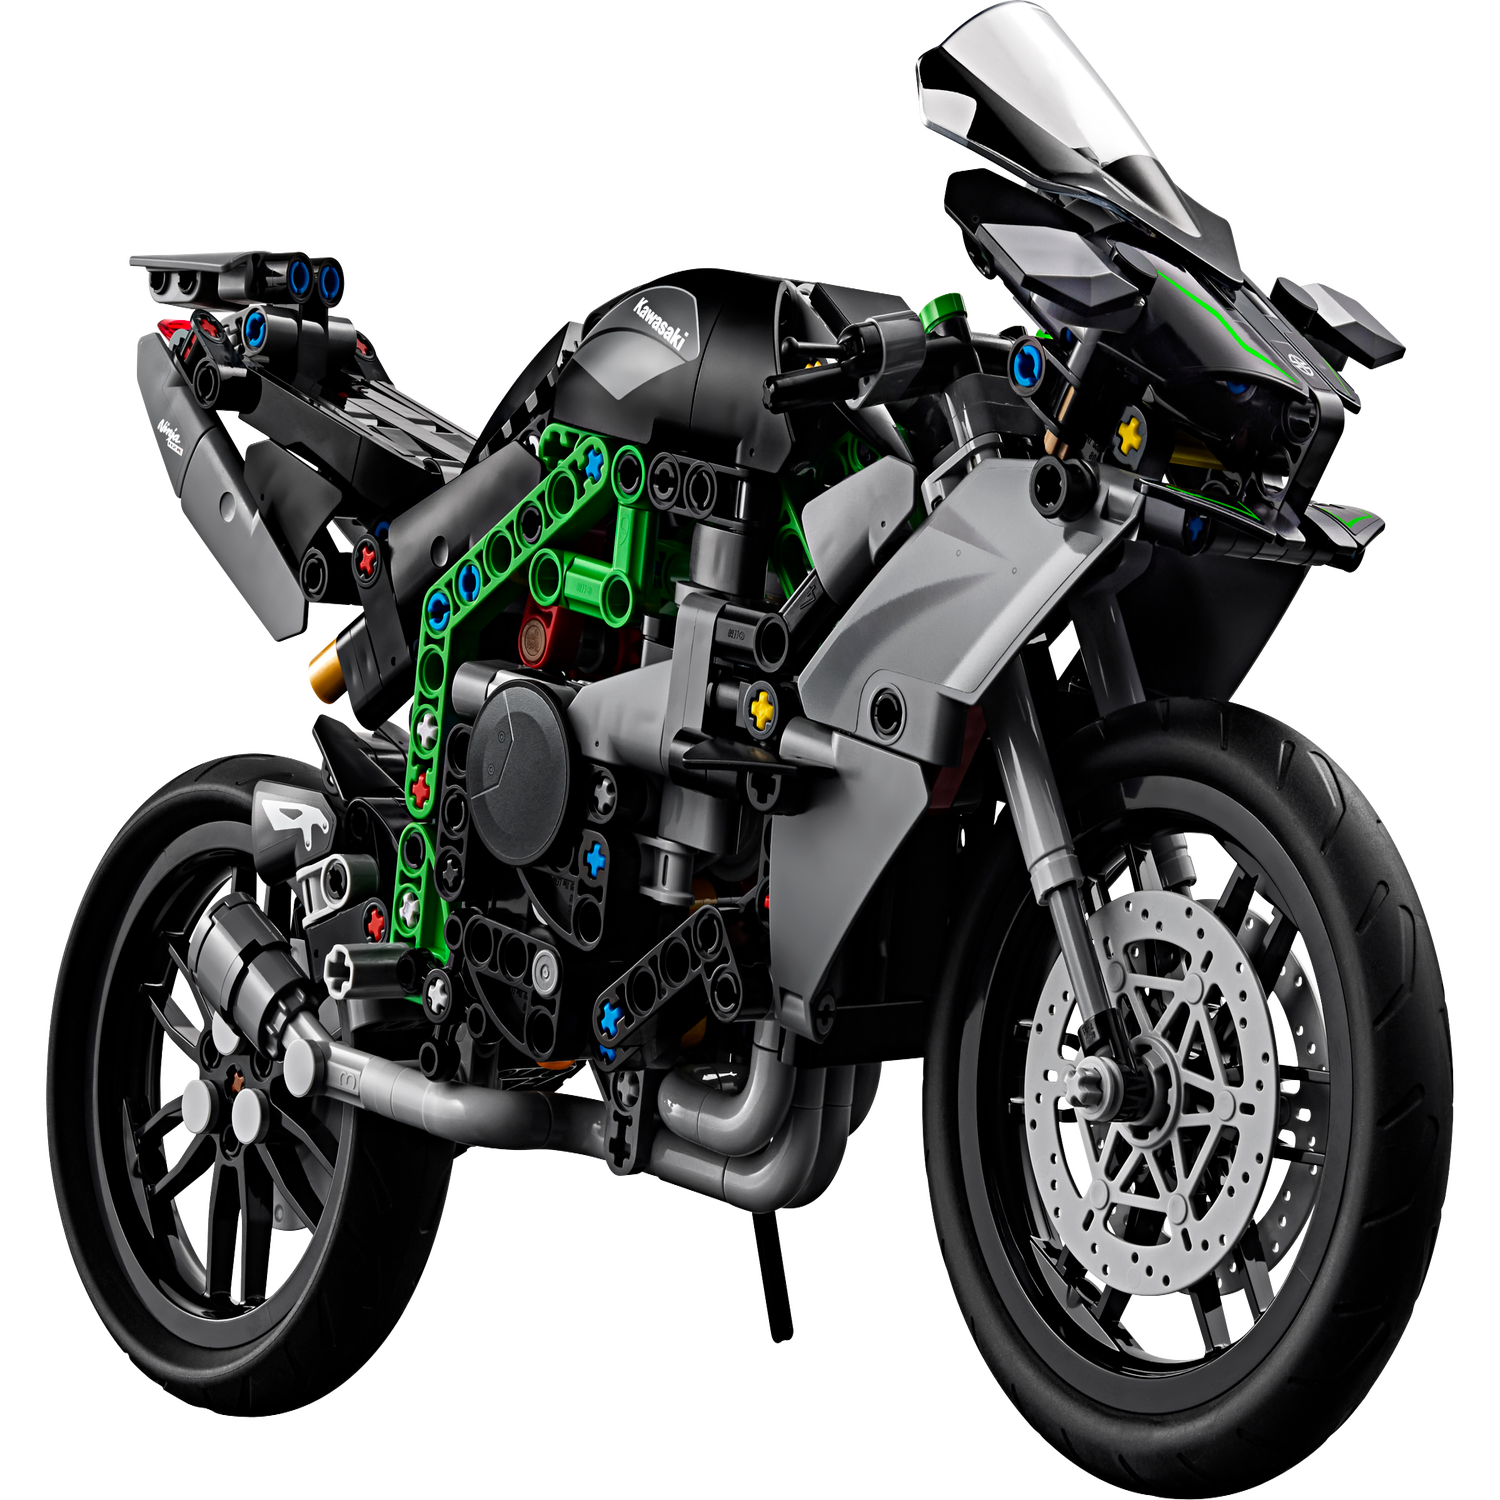 Kawasaki Ninja H2R Motorcycle 42170, Technic™